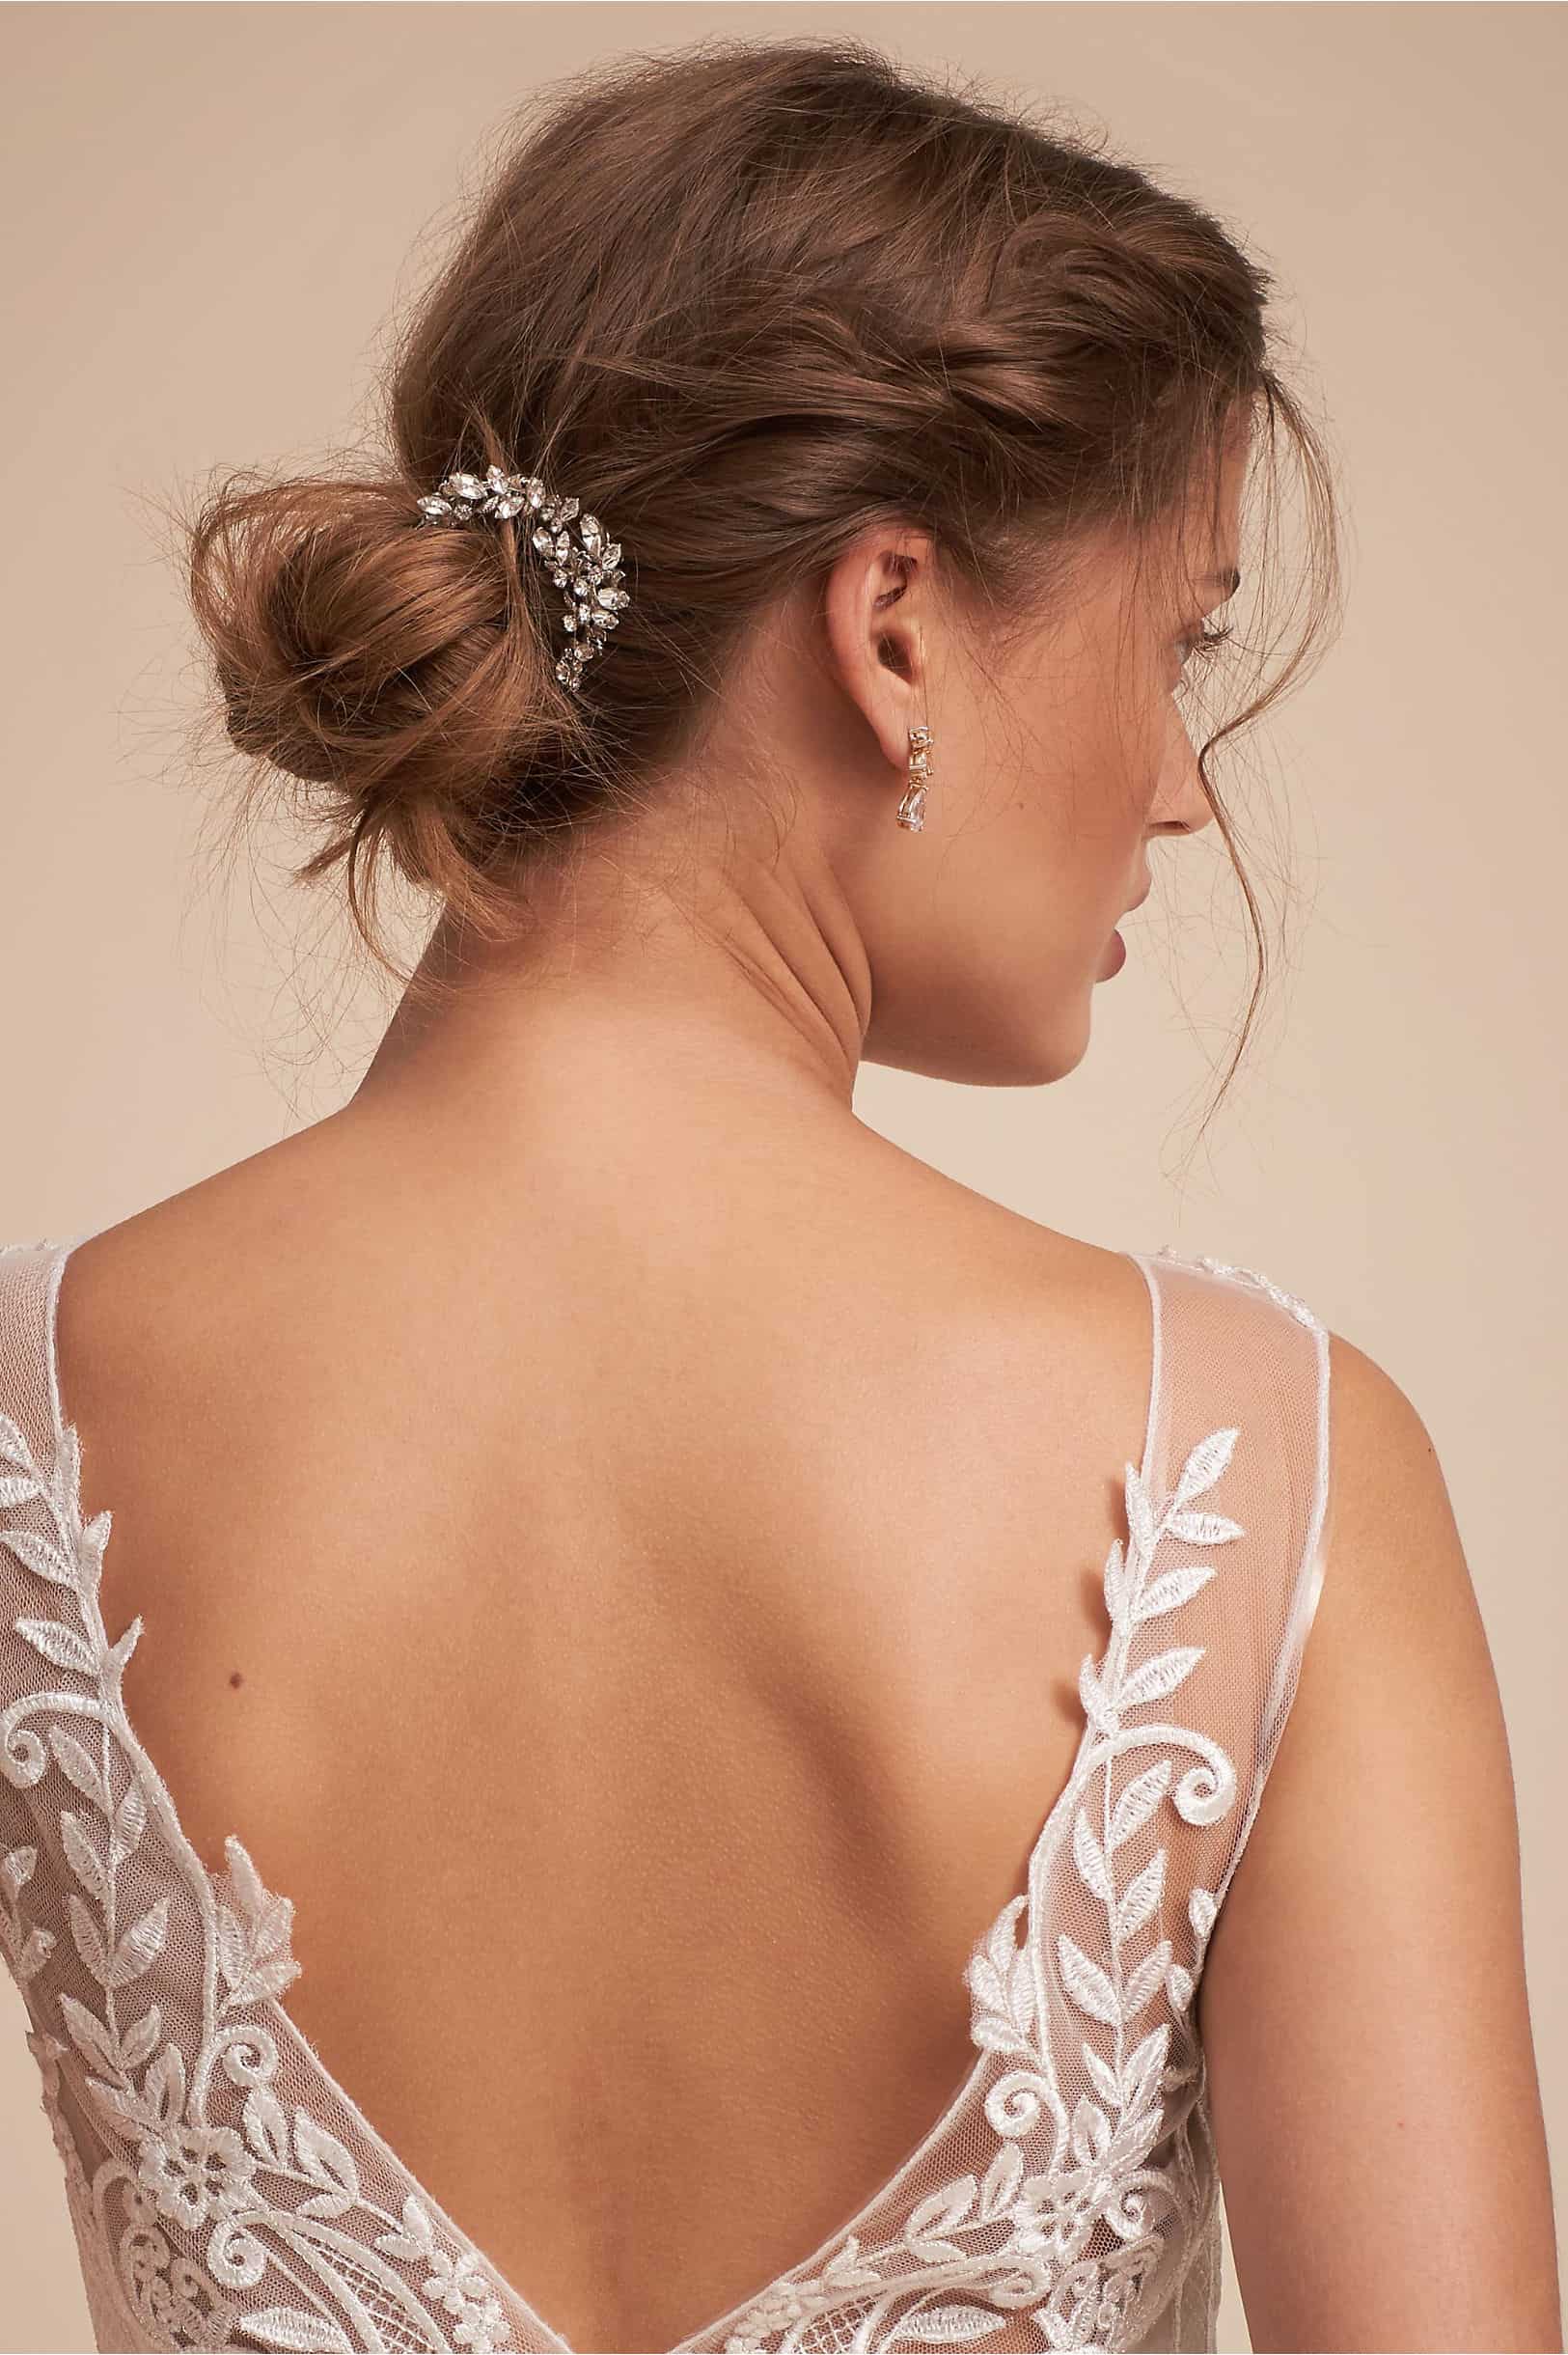 Swarovski Crystal Floral Motif Sparkling Combs Bridal Headpiece Wedding Hair Accessories Ti Adoro Brockton Hair Combs